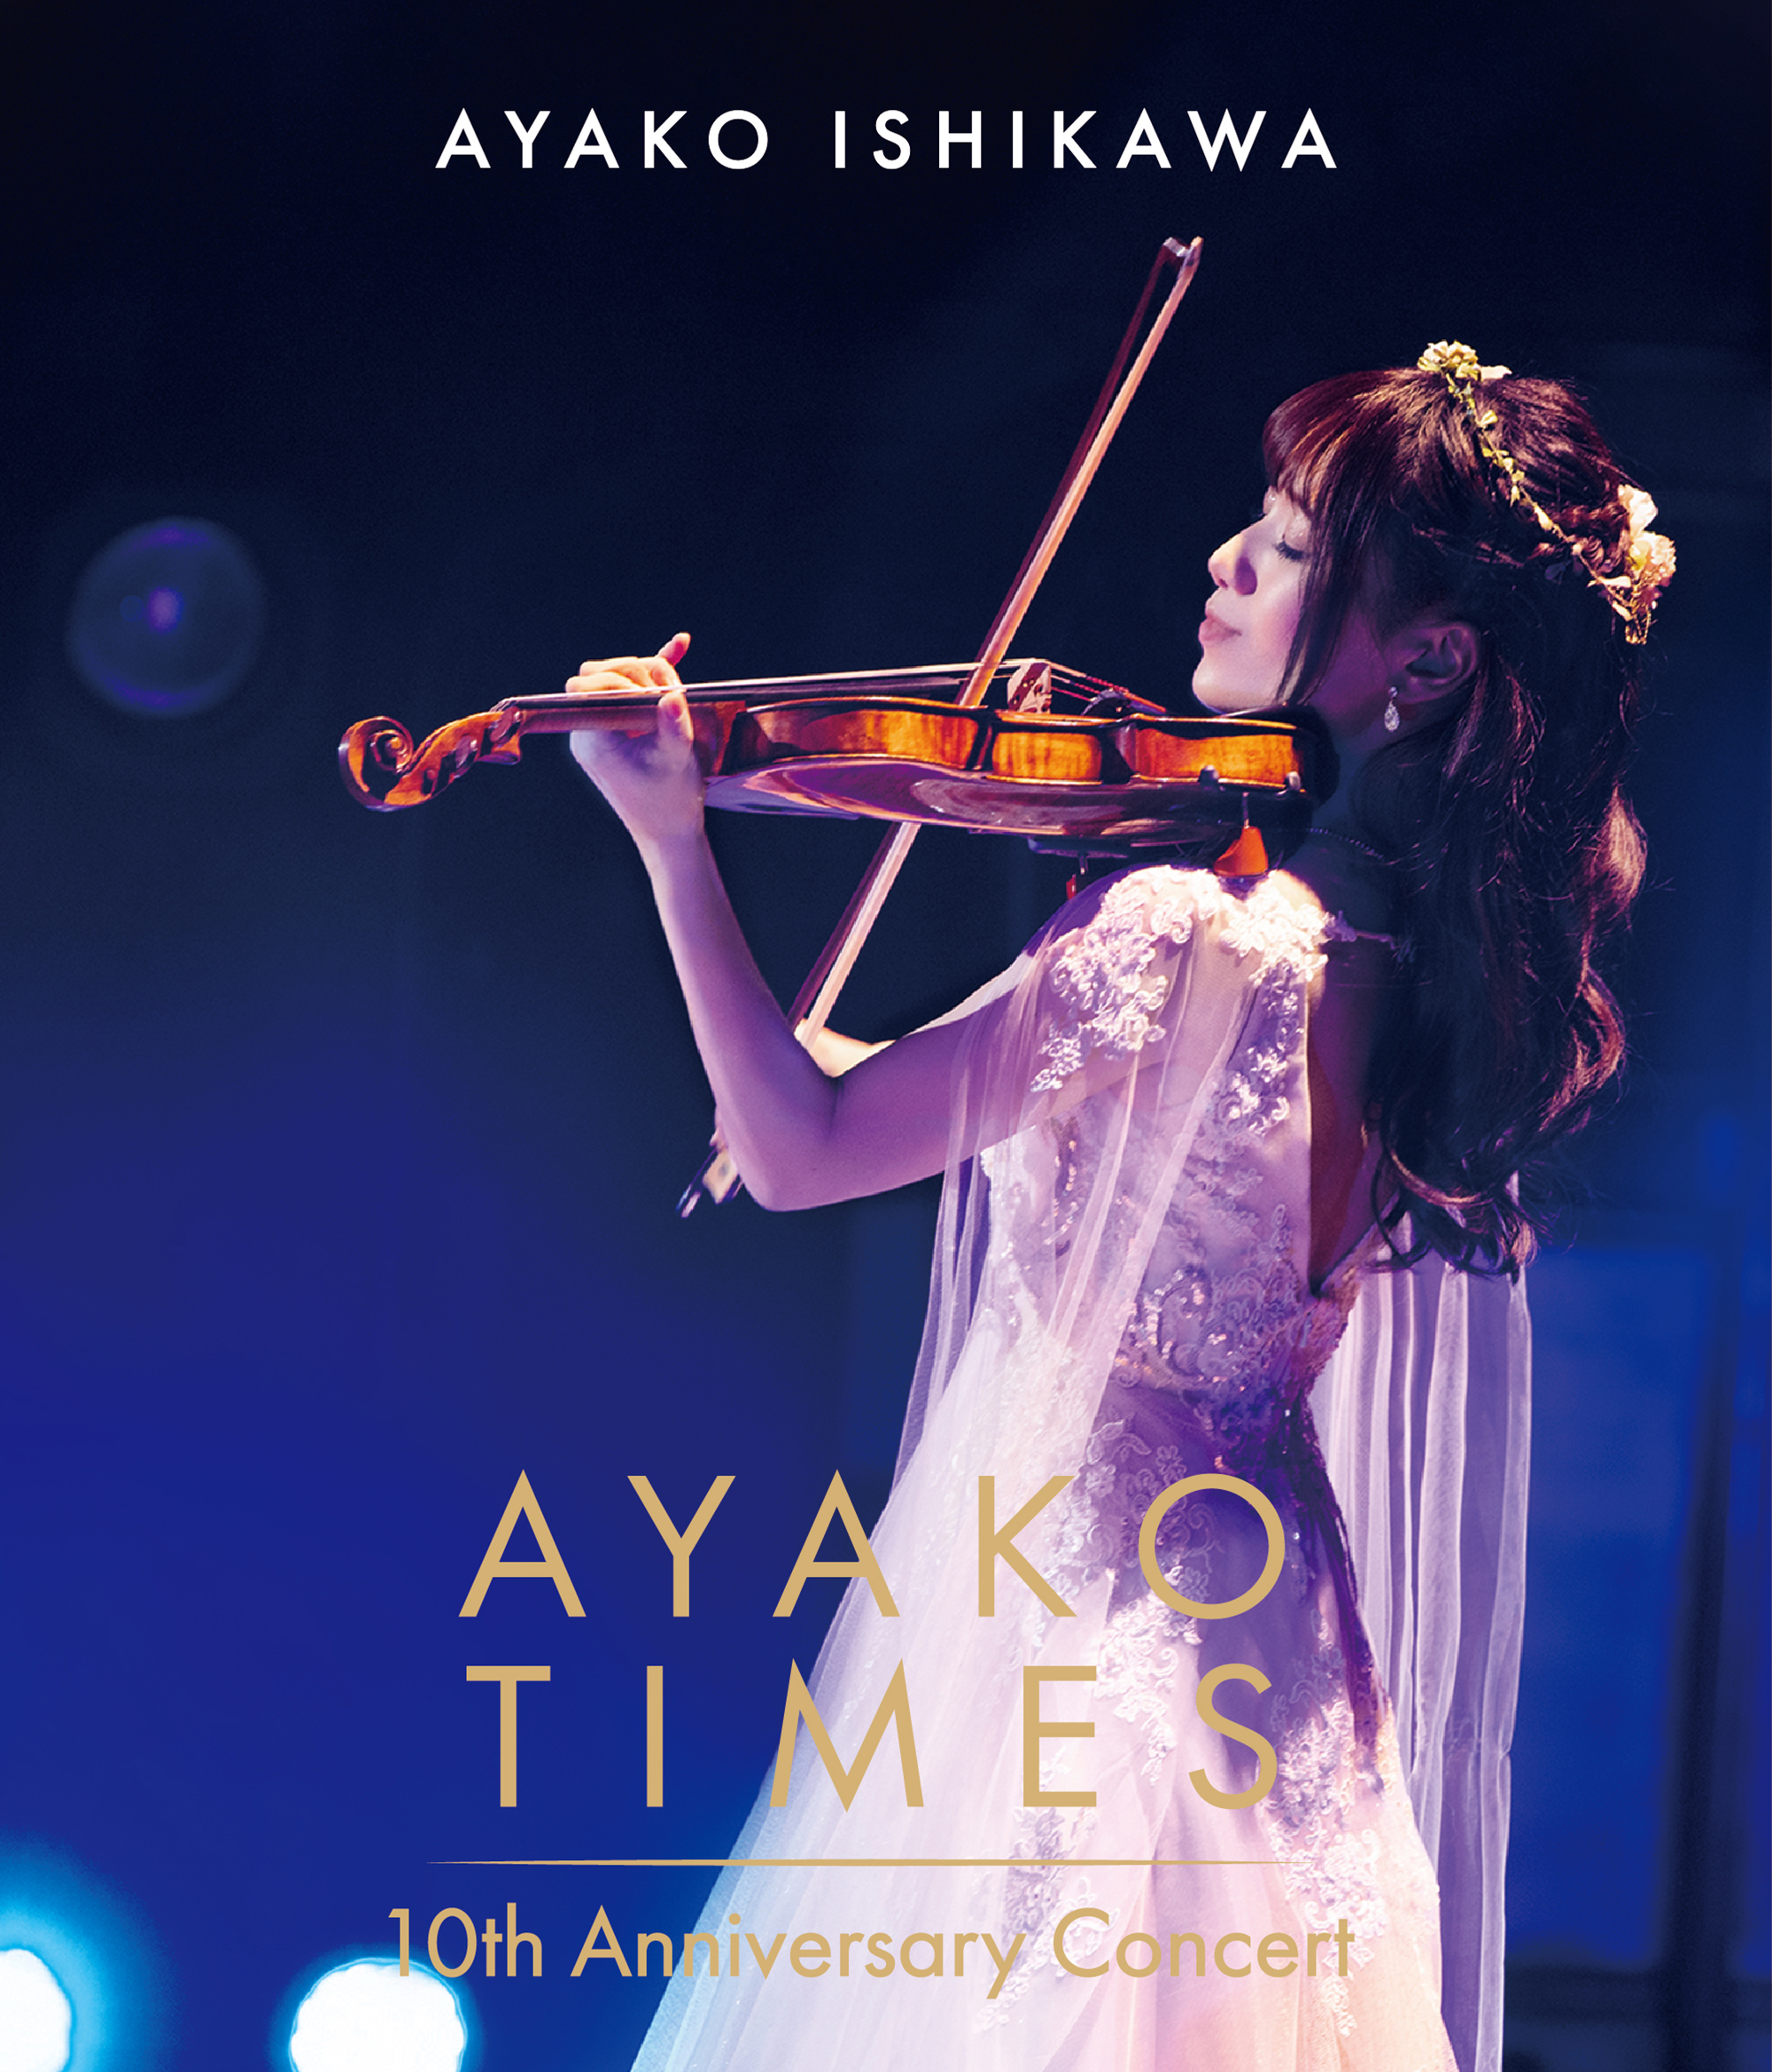 AYAKO TIMES 10th Anniversary Concert